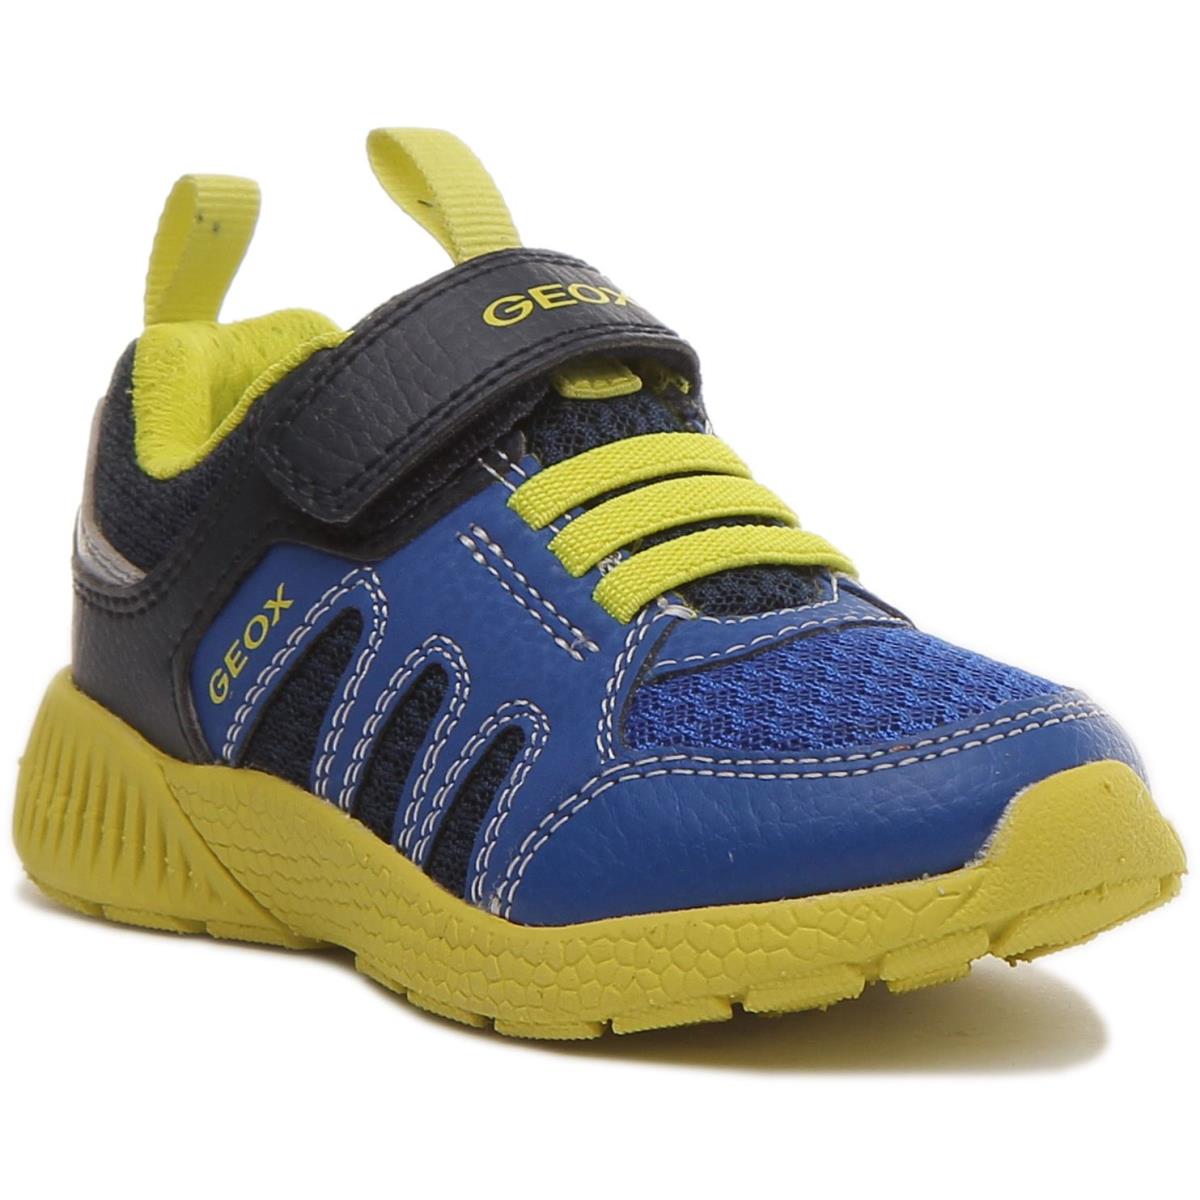 Geox J Sveth B. Kids Single Strap Athletic Sneaker In Navy Yellow Size US 8 - 13 NAVY YELLOW